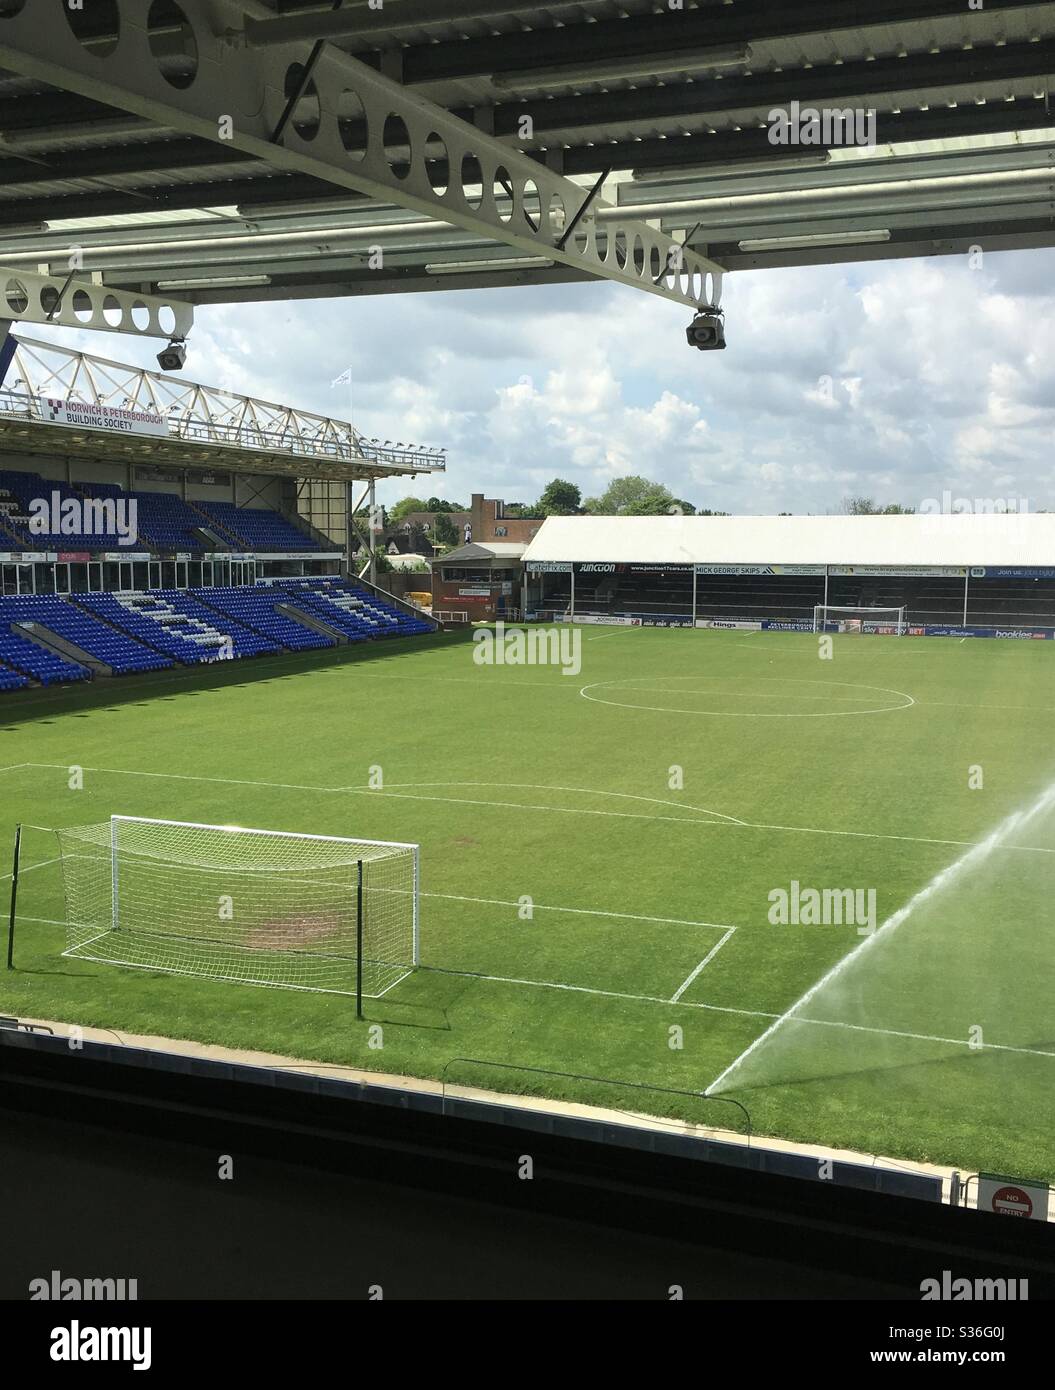 Football pitch at Peterborough Football Club Stock Photo - Alamy